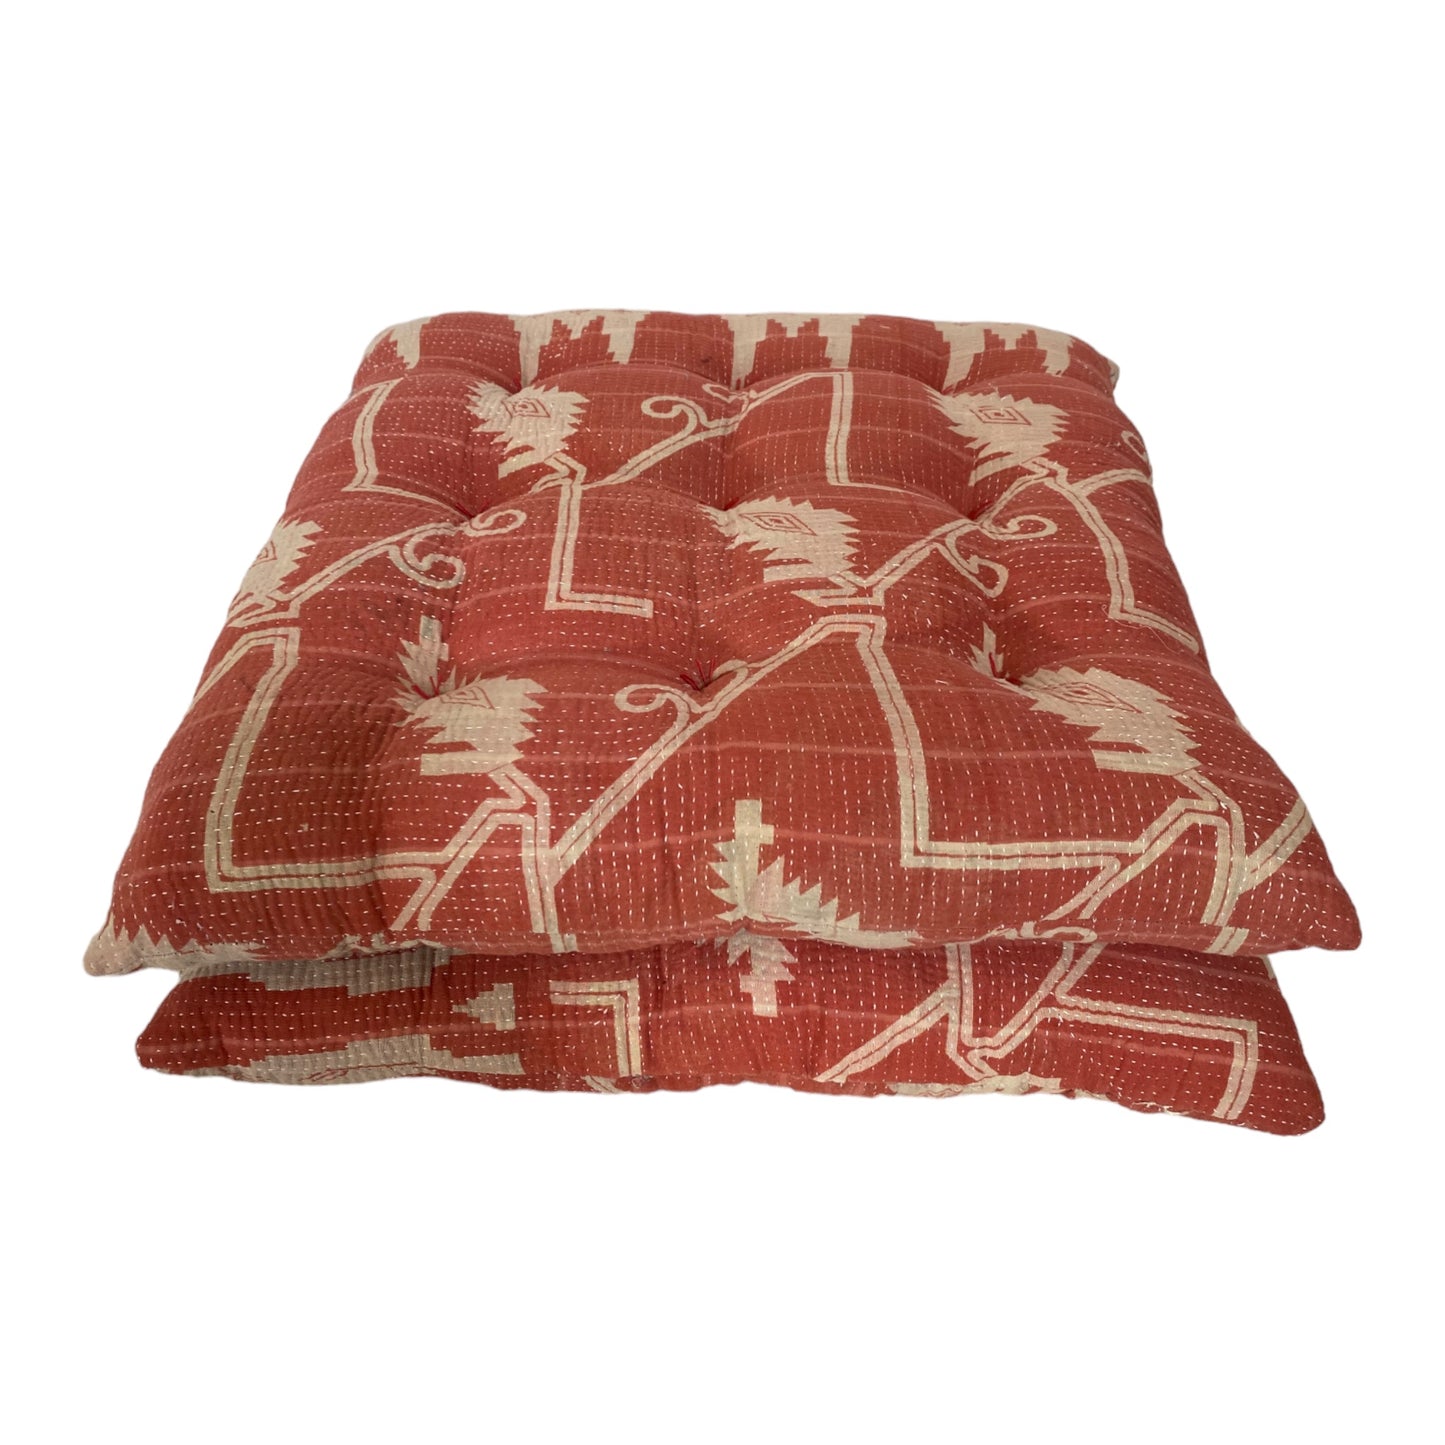 Red Kantha seat cushions